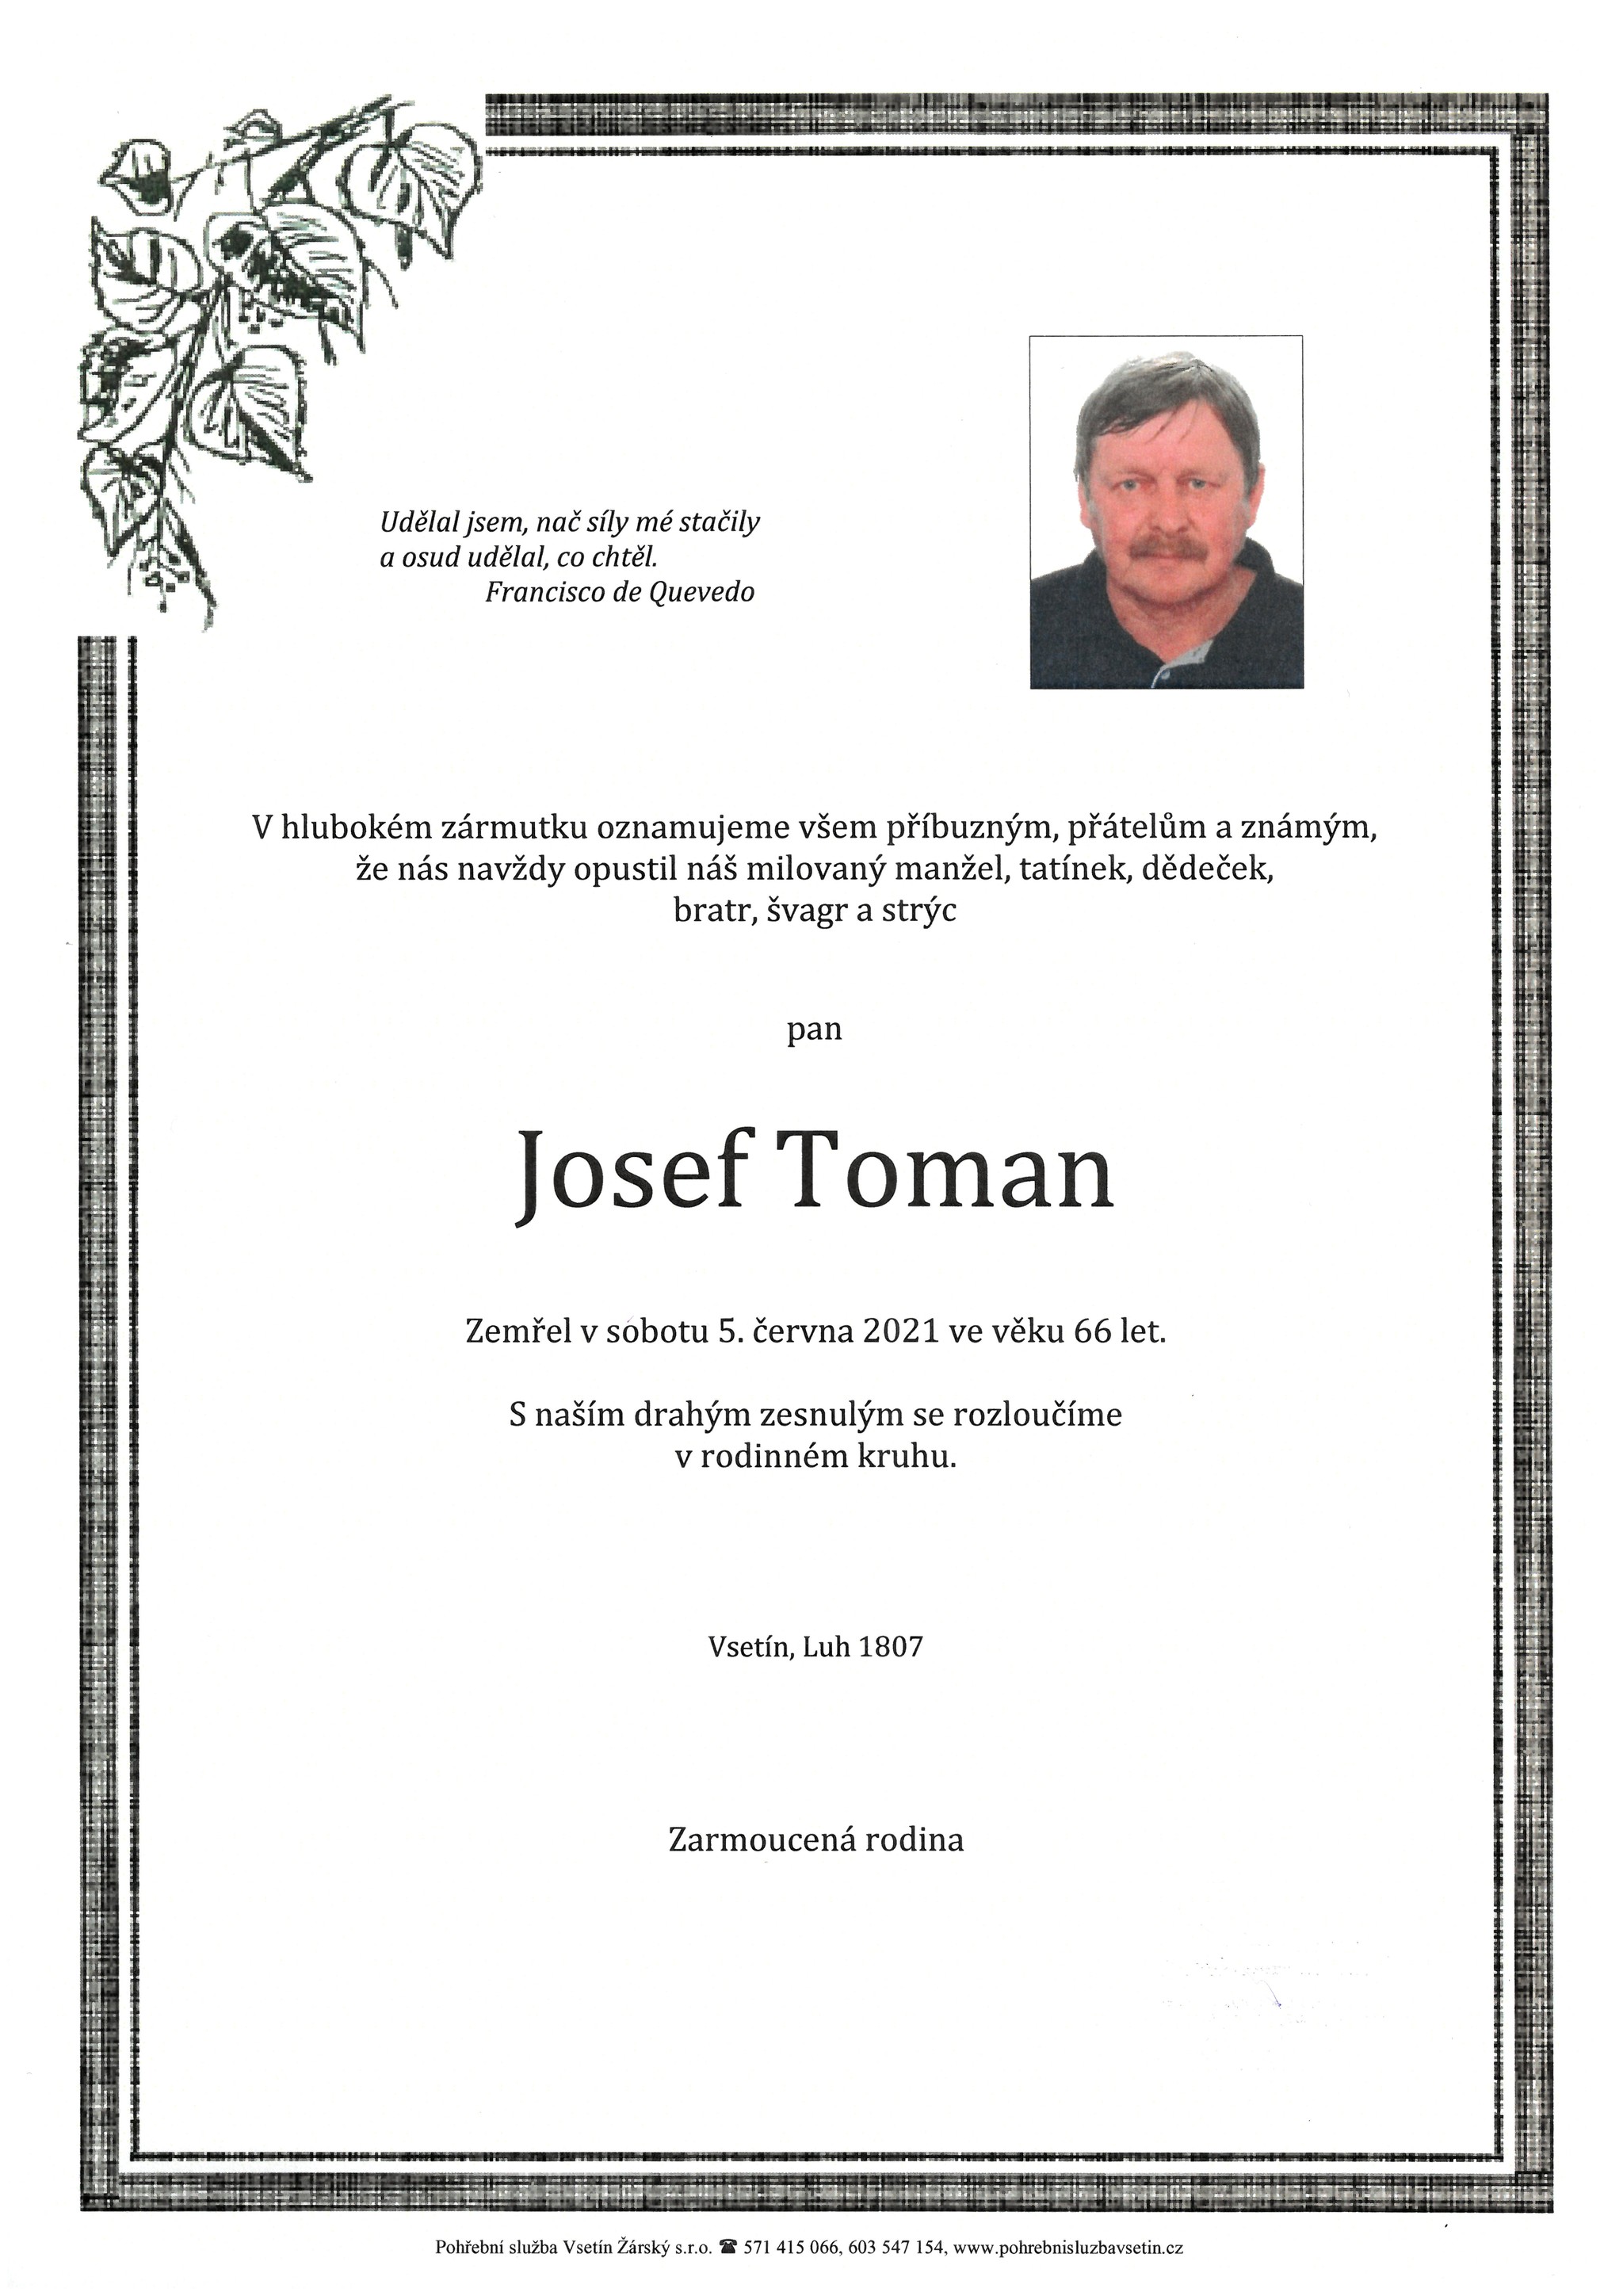 Josef Toman